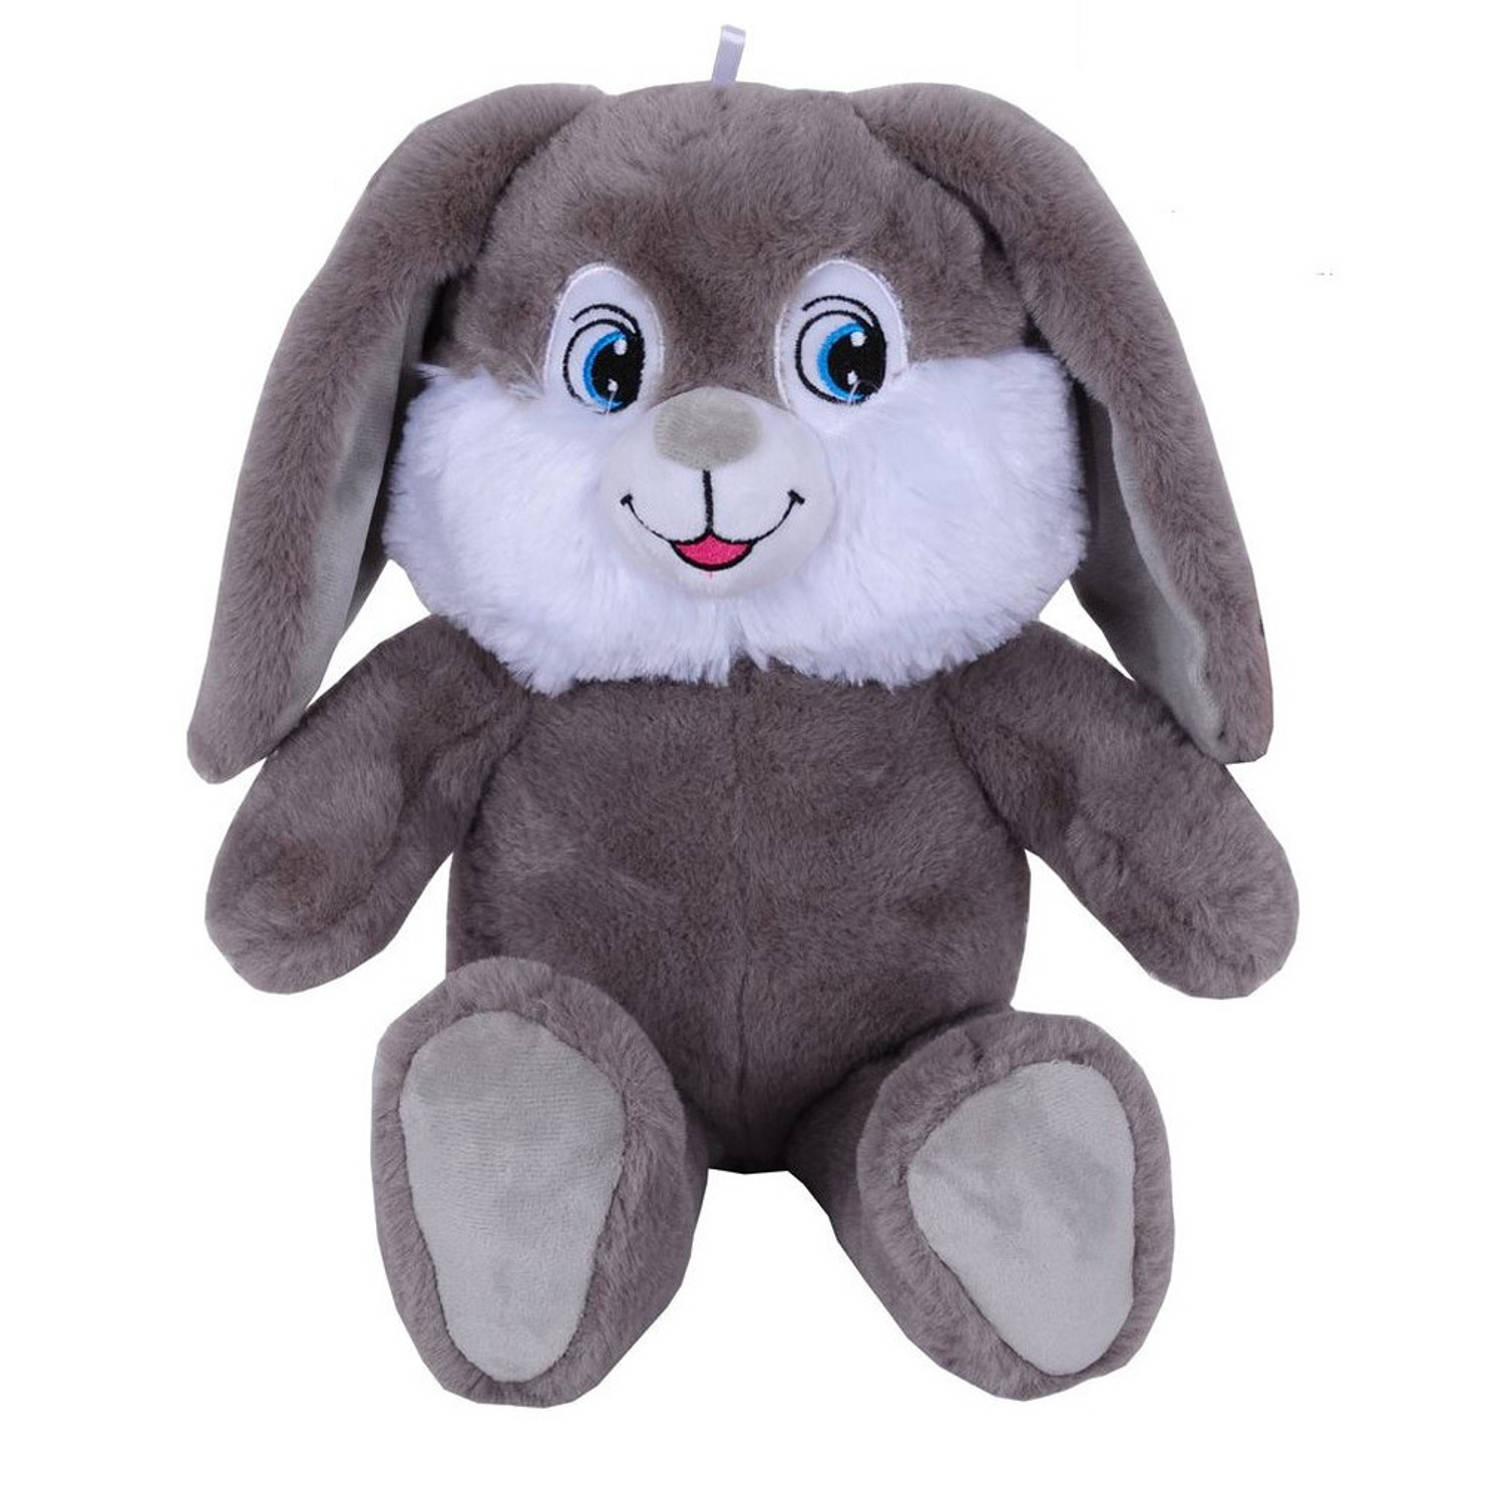 Pluche speelgoed knuffeldier Paashaas/grijs konijn van 30 cm - Knuffeldier